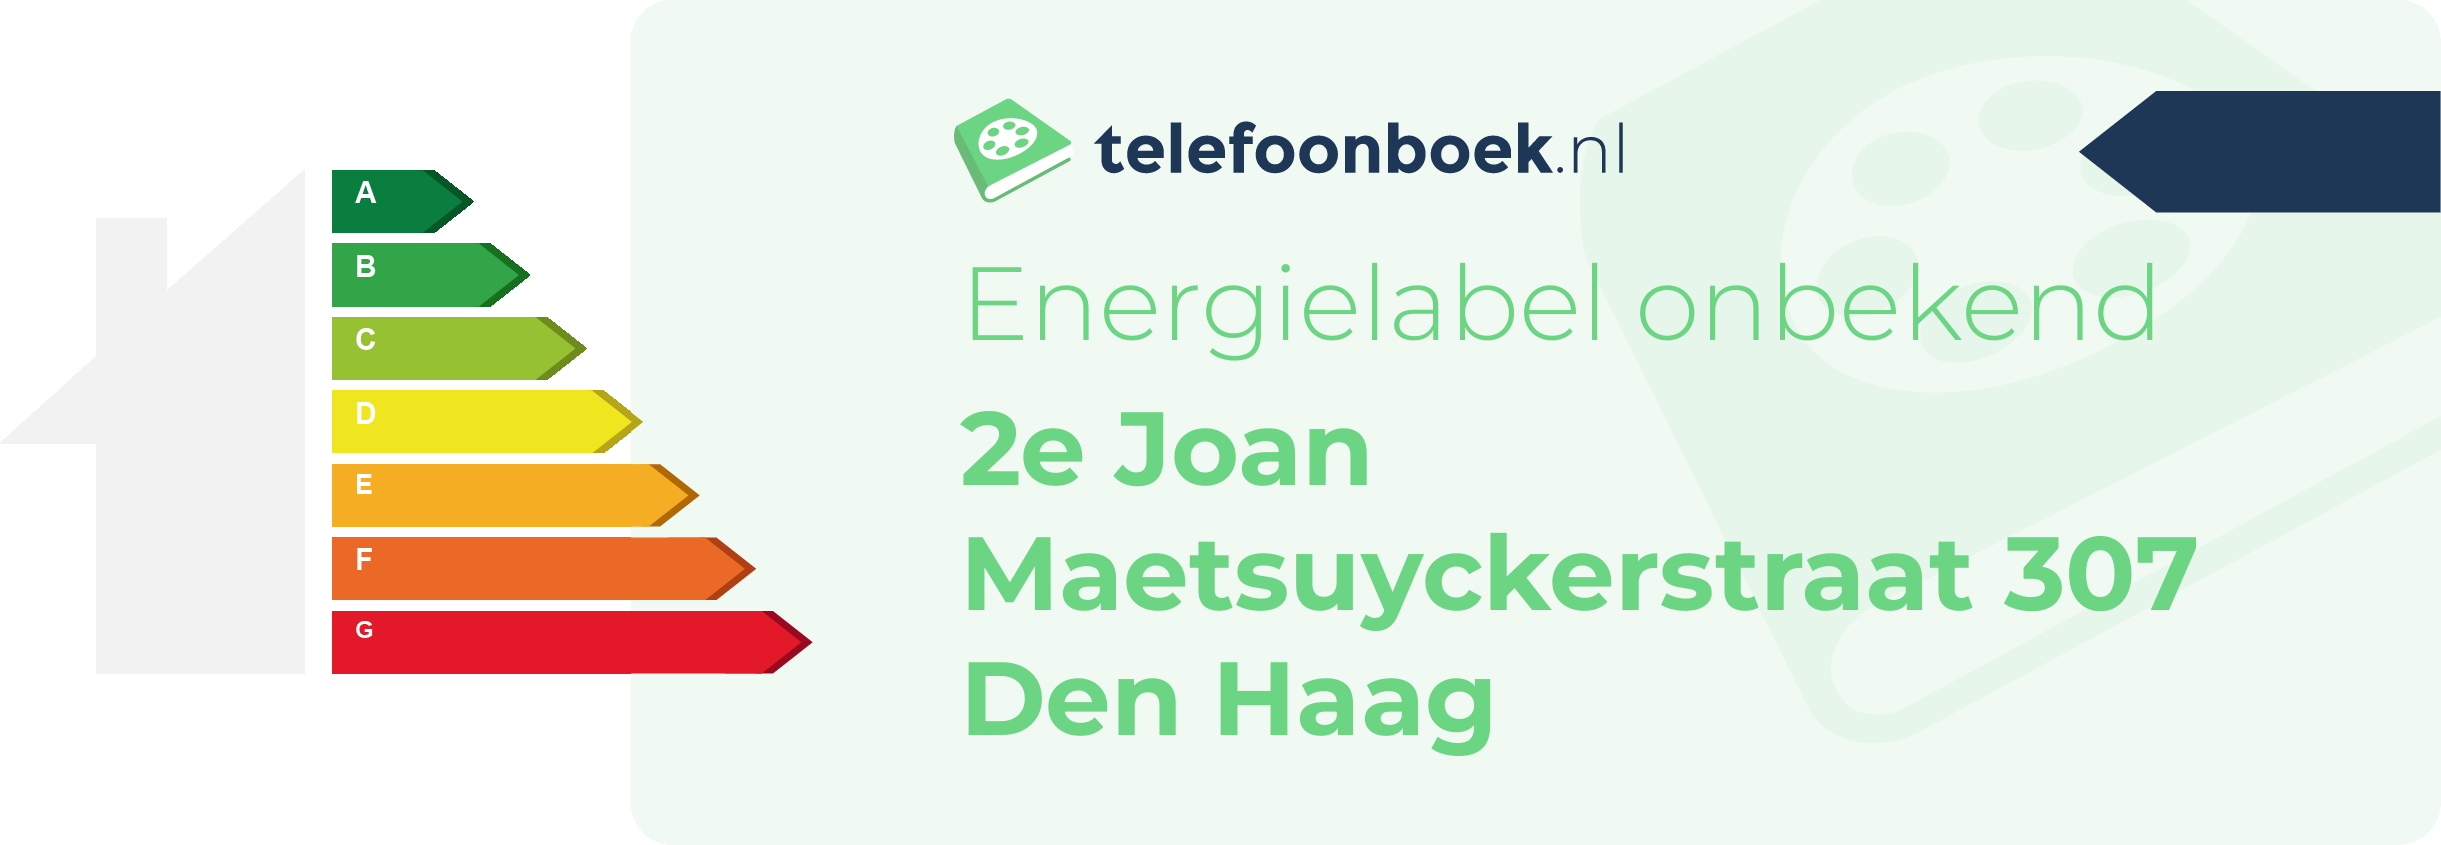 Energielabel 2e Joan Maetsuyckerstraat 307 Den Haag